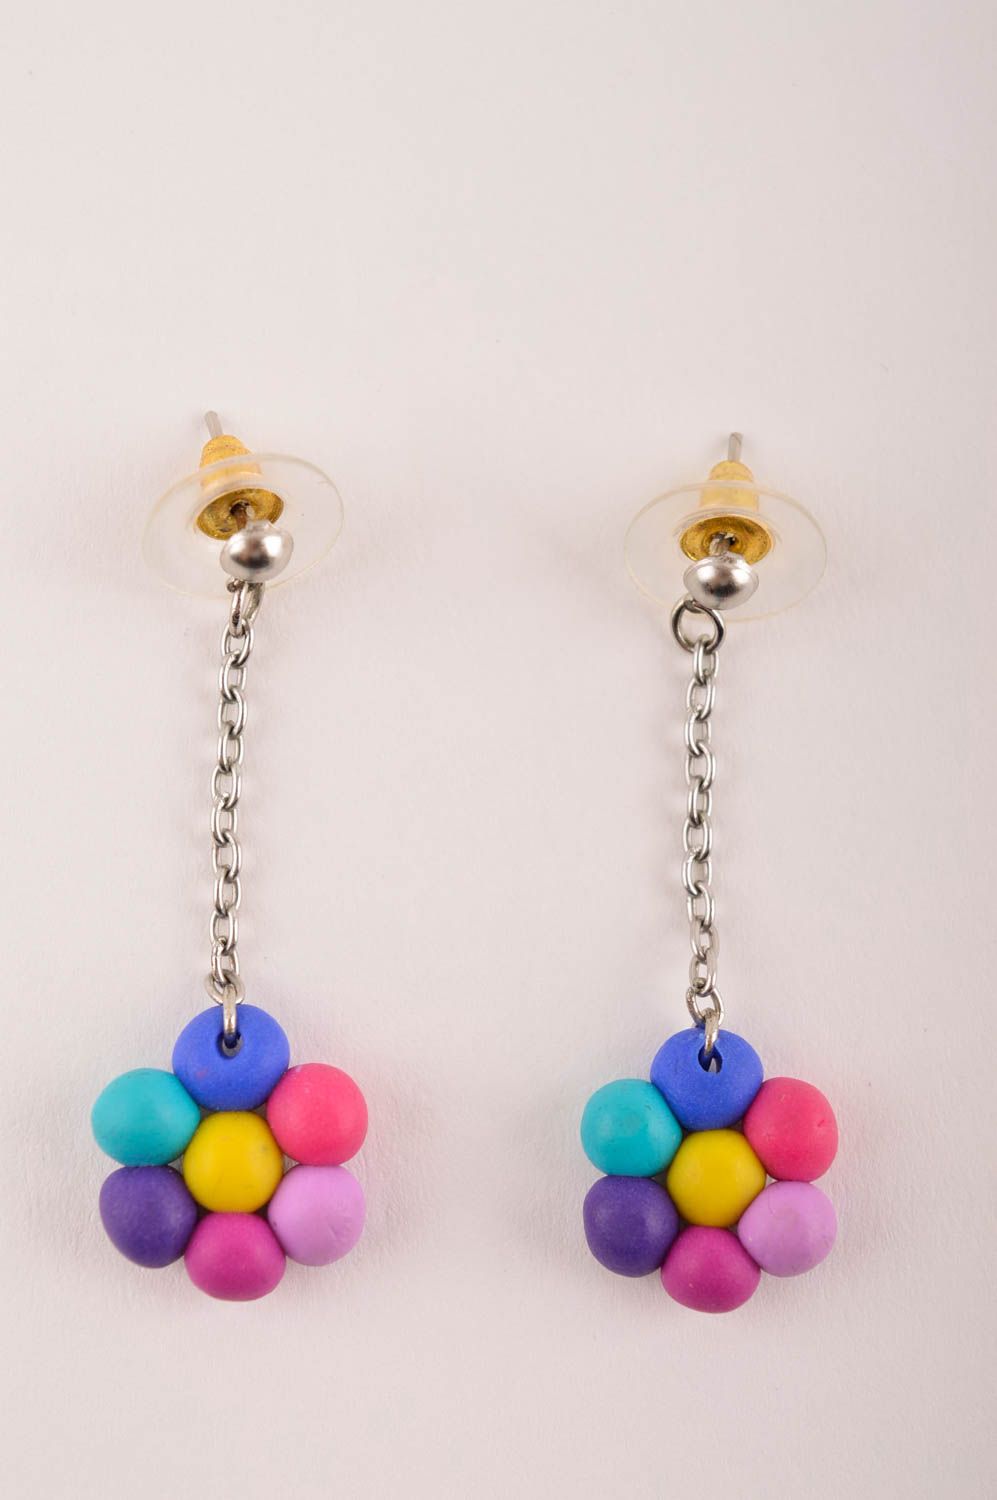 Handmade earrings designer earrings polymer clay jewelry unusual gift for women photo 3